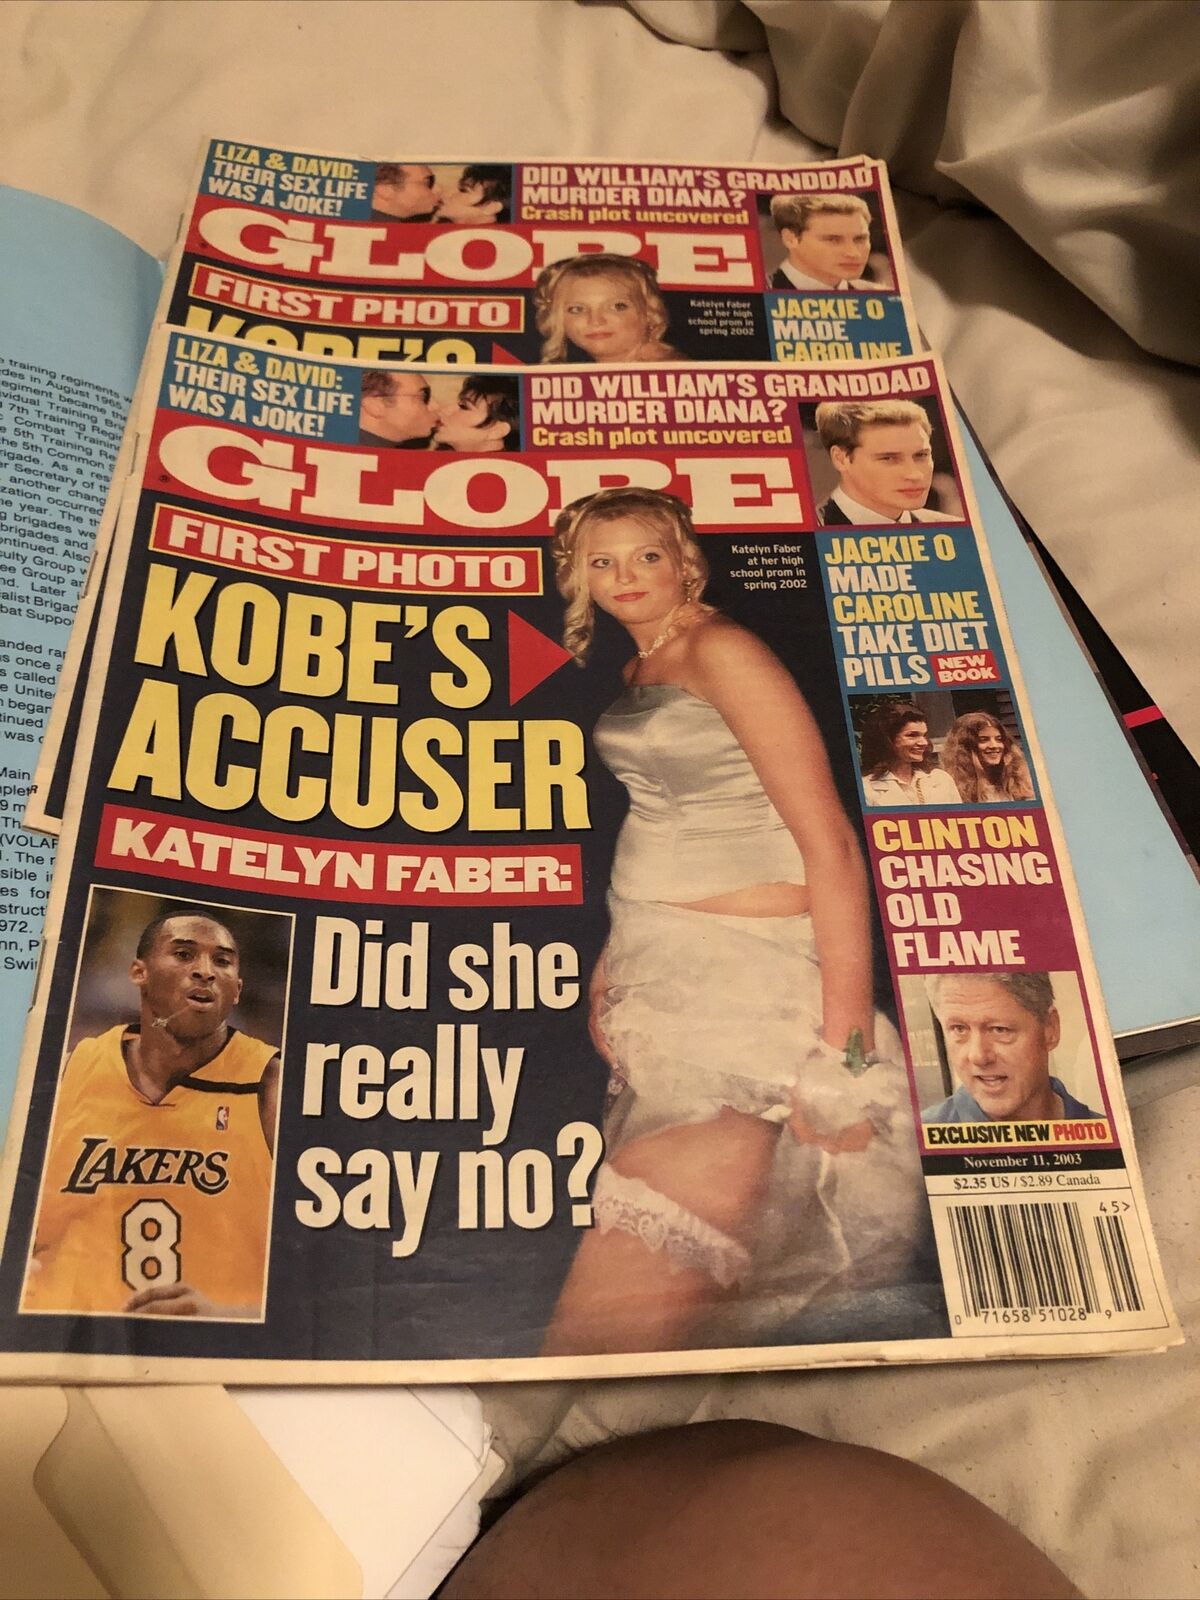 Globe Magazine of First Edition Photos of Kobe’s Accuser November 11 2003 